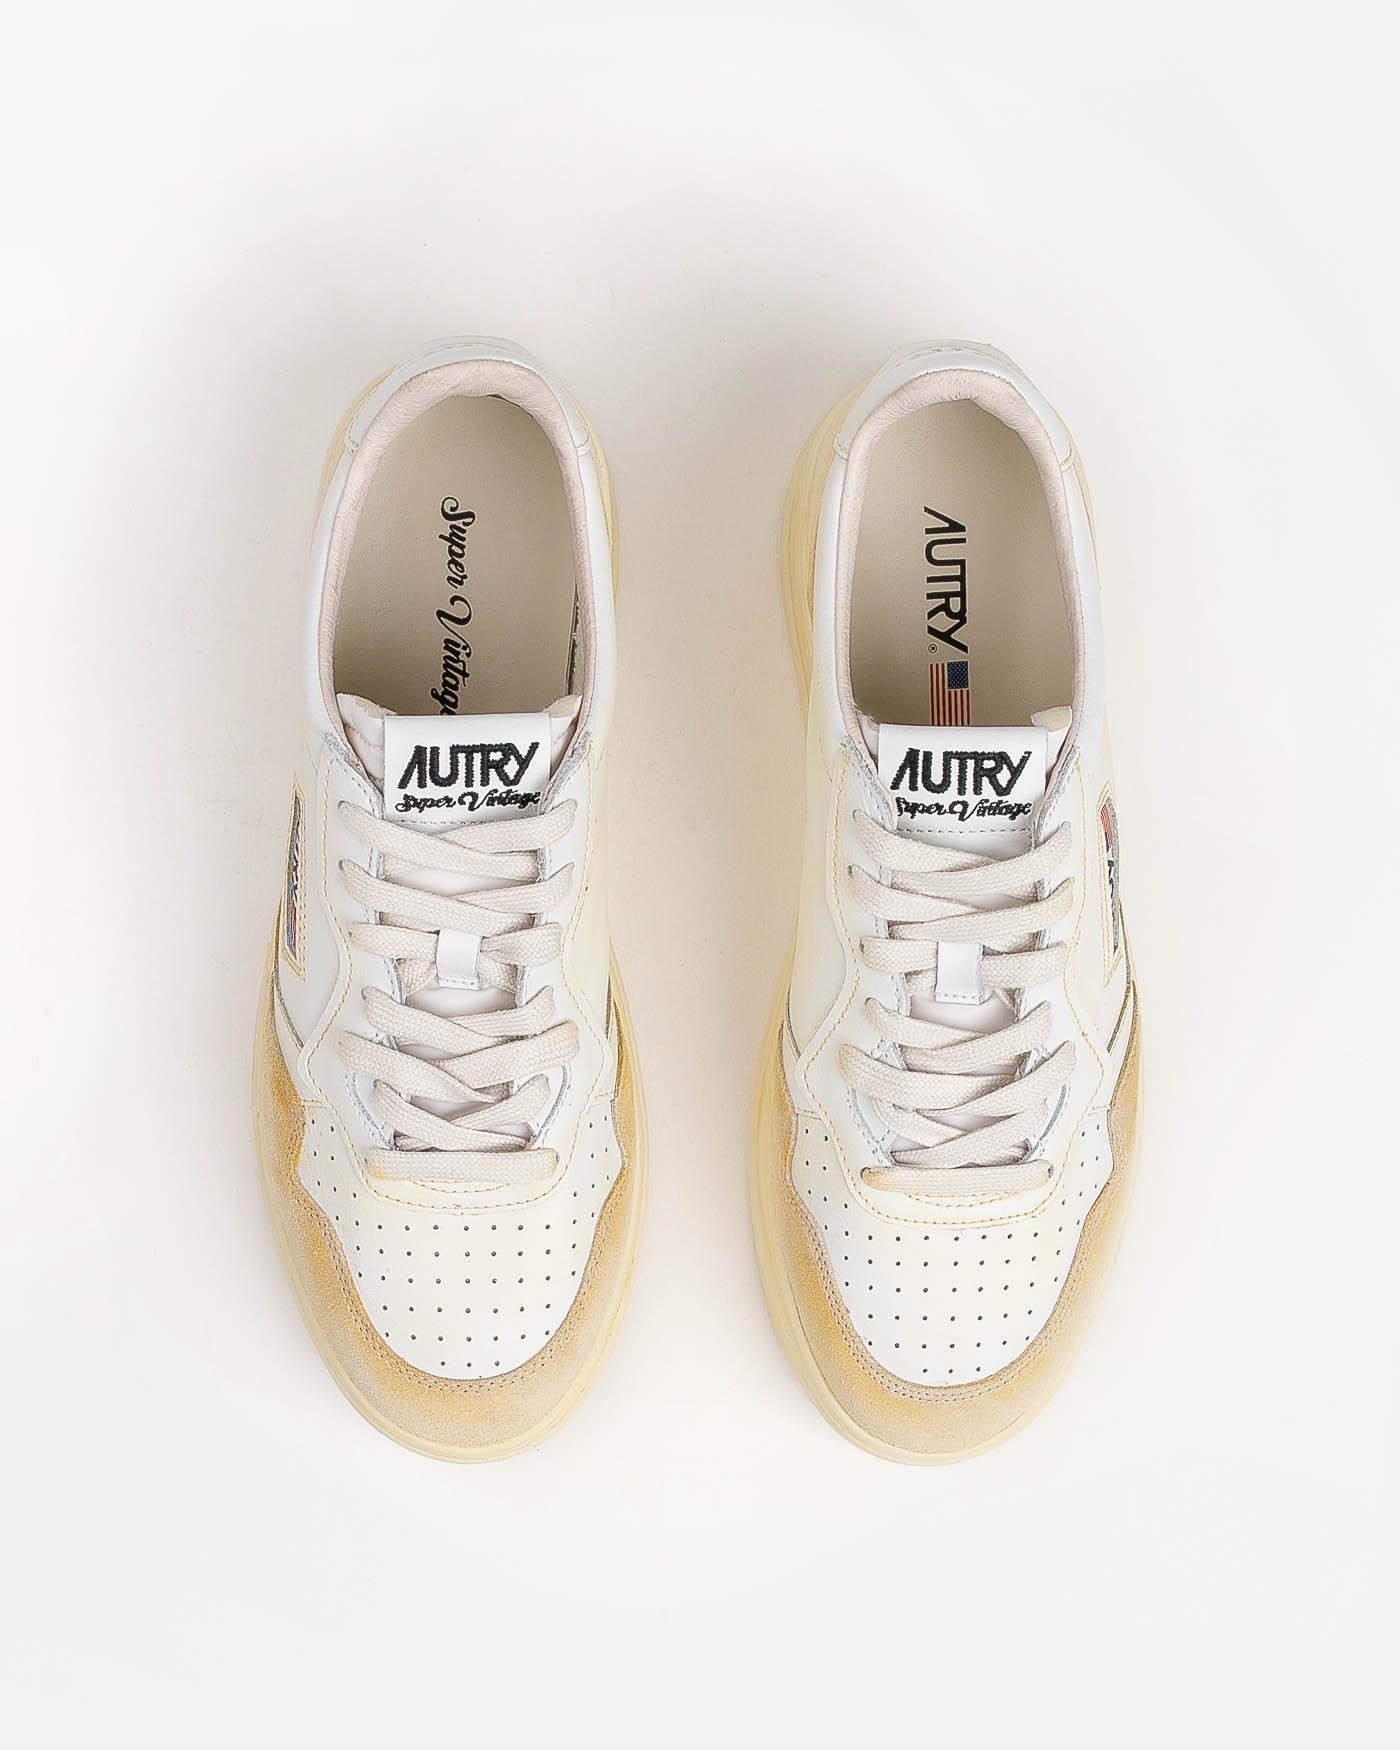 autry-zapatillas-avlm-yl01-sneakers-white-blancas-7